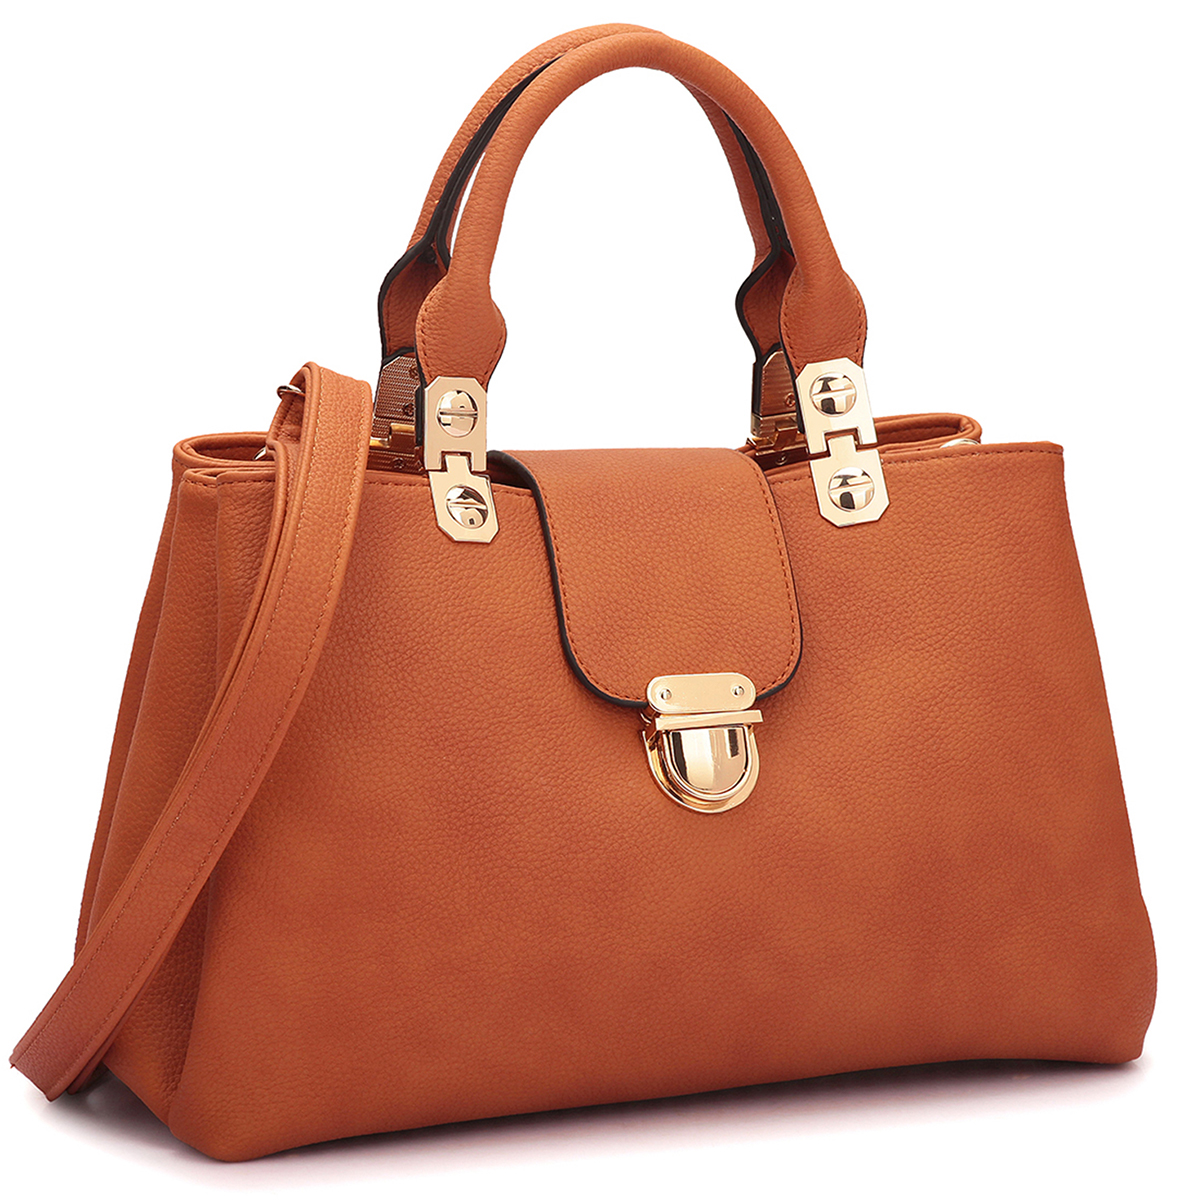 Dasein Women Satchel Handbags Top Handle Purse Medium Tote Bag Vegan Leather Shoulder Bag - image 1 of 6